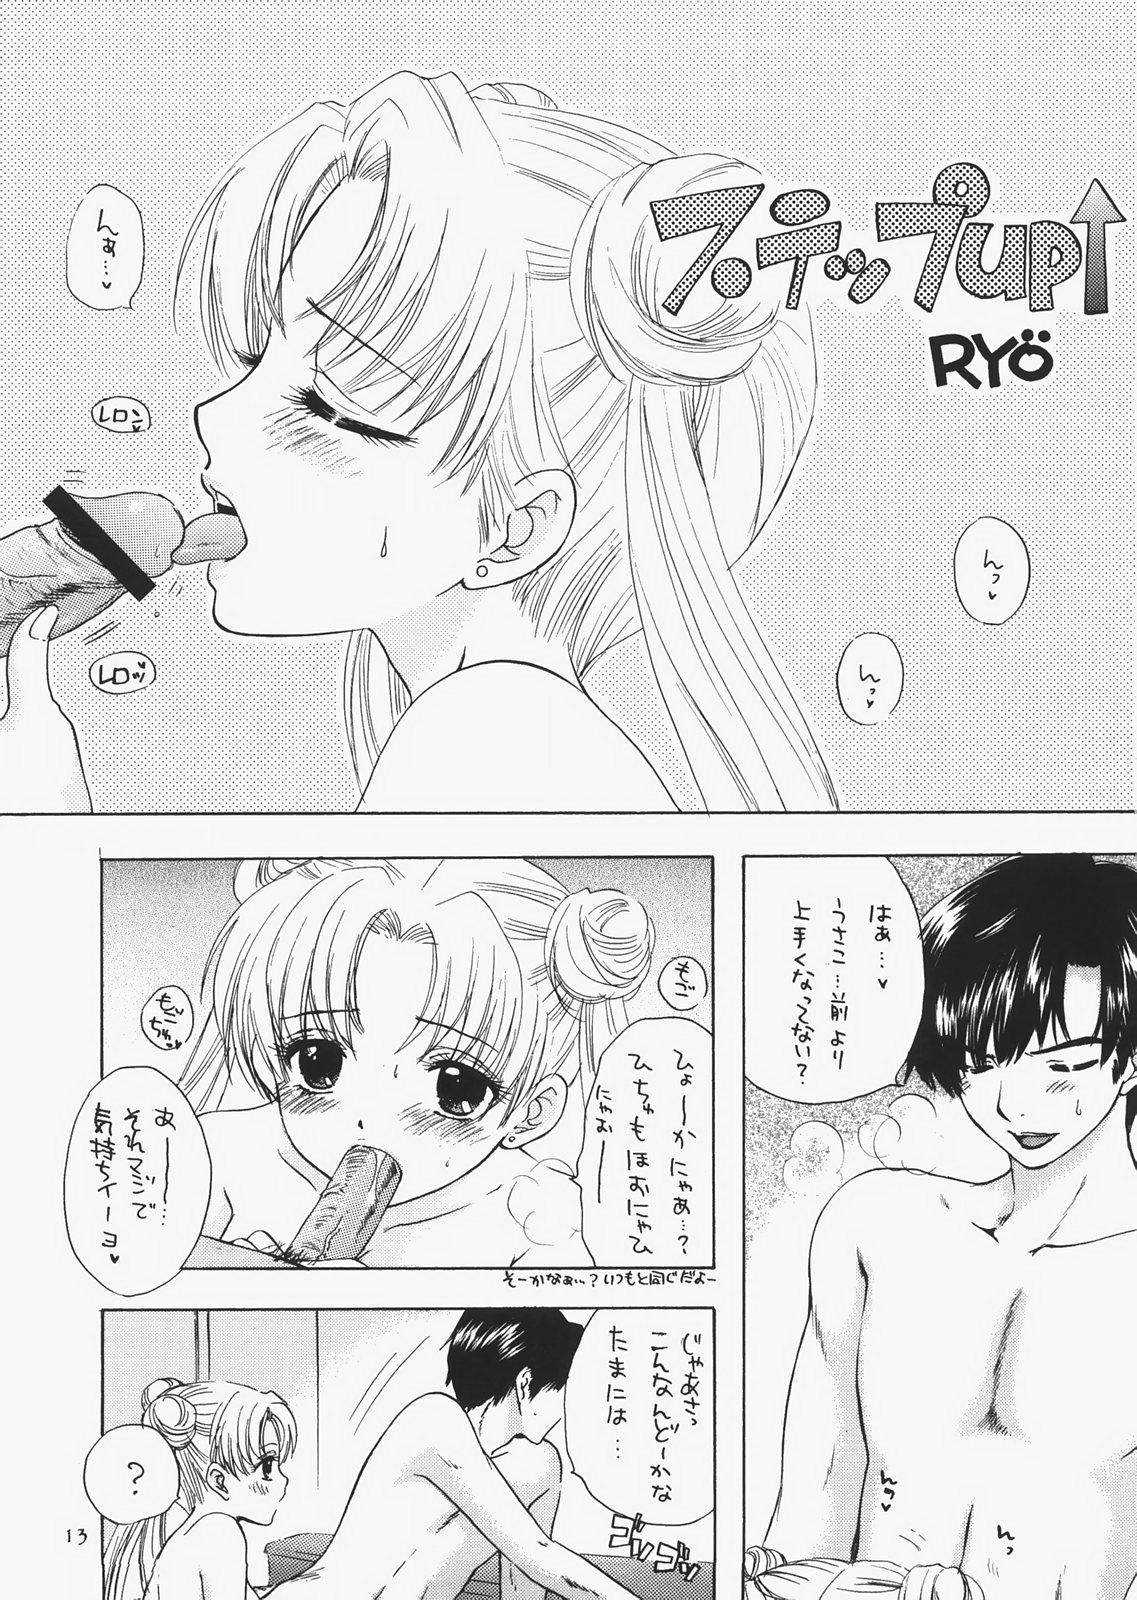 Mouth 1000000-nin no Shoujo side star - Sailor moon Funk - Page 8